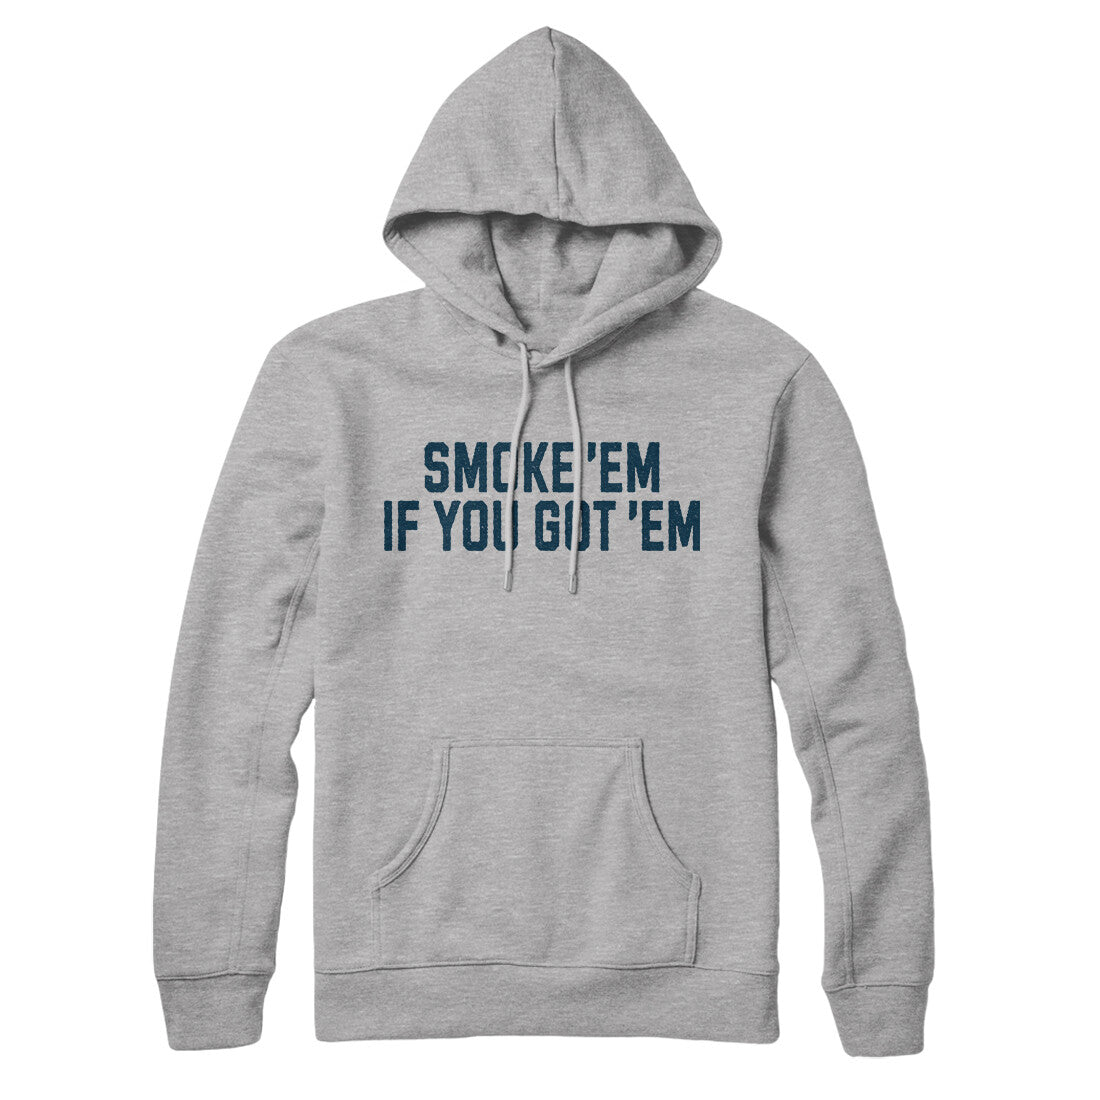 Smoke ‘em If you Got ‘em in Heather Grey Color